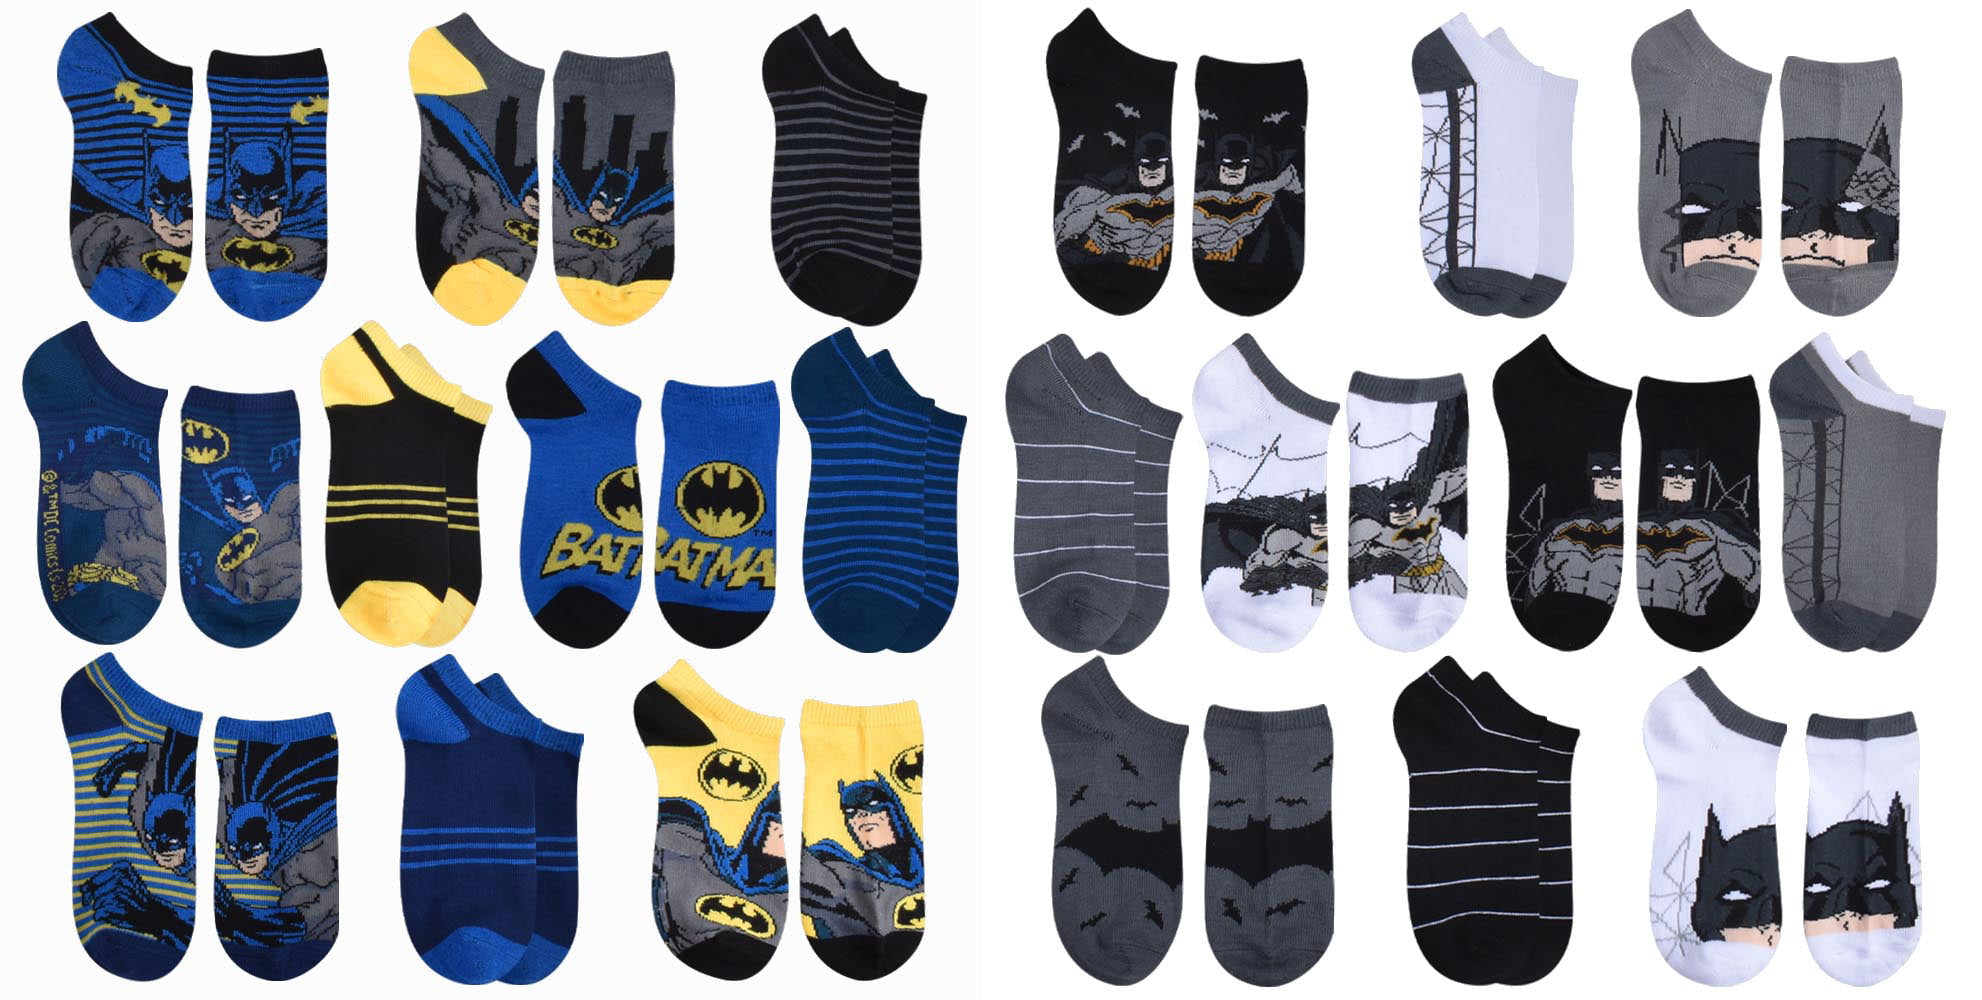 Batman Boys Socks, 20 Pack No Shows, Sizes S (4-6) - M (6-8) - Walmart.com